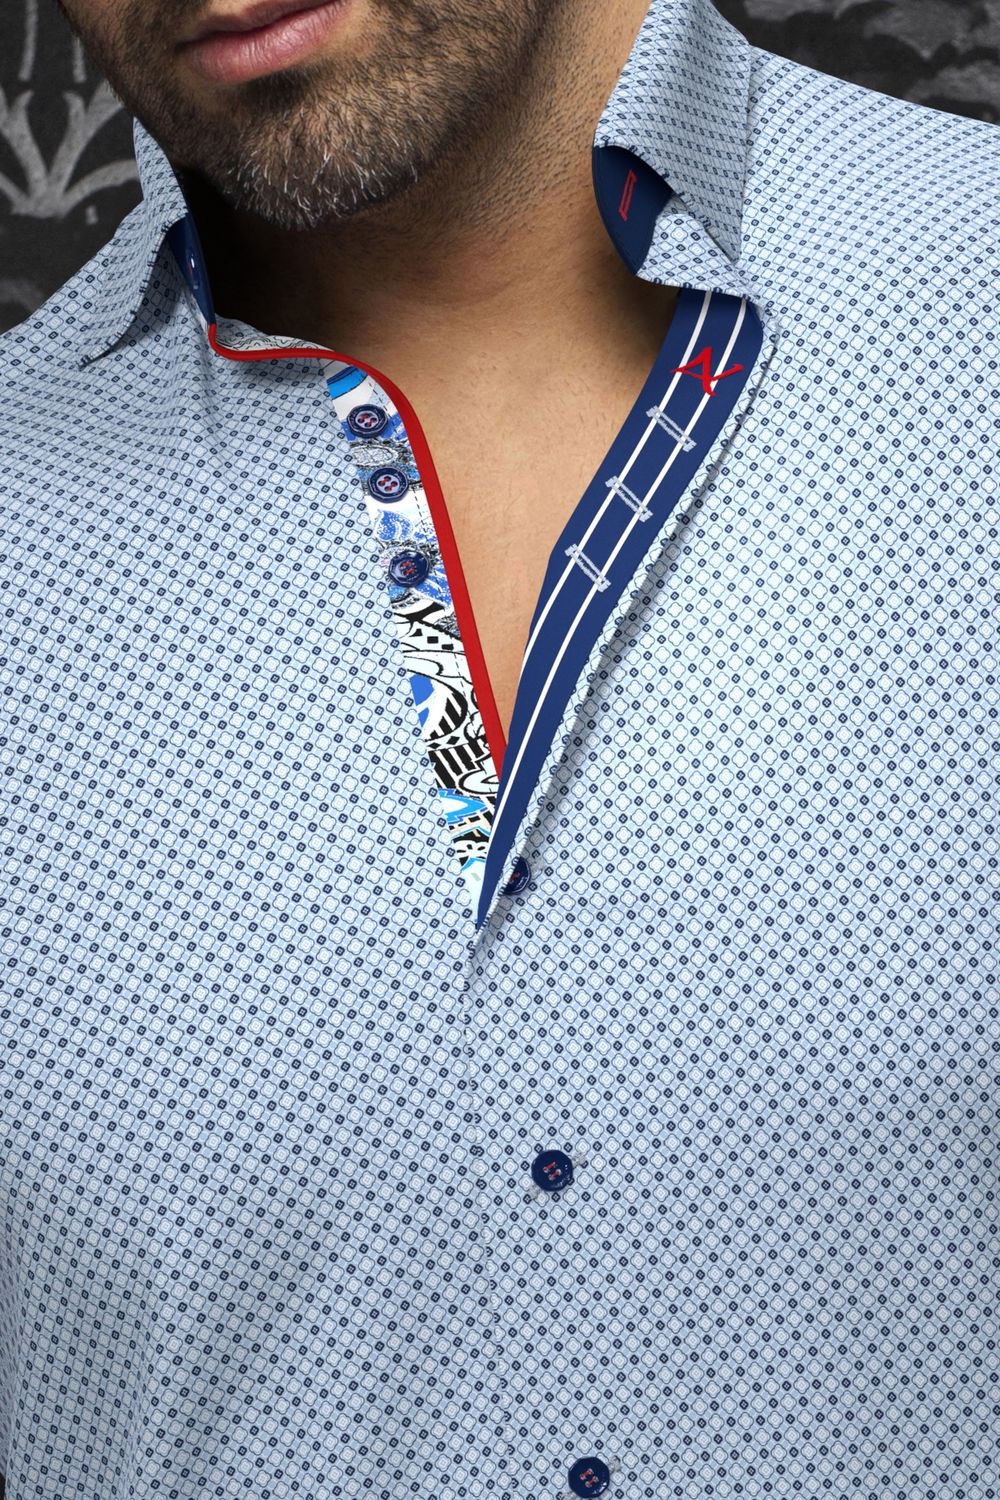 Botero Short Sleeve Sport Shirt, Size: 4-L, Colour: Blue, Model: Botero